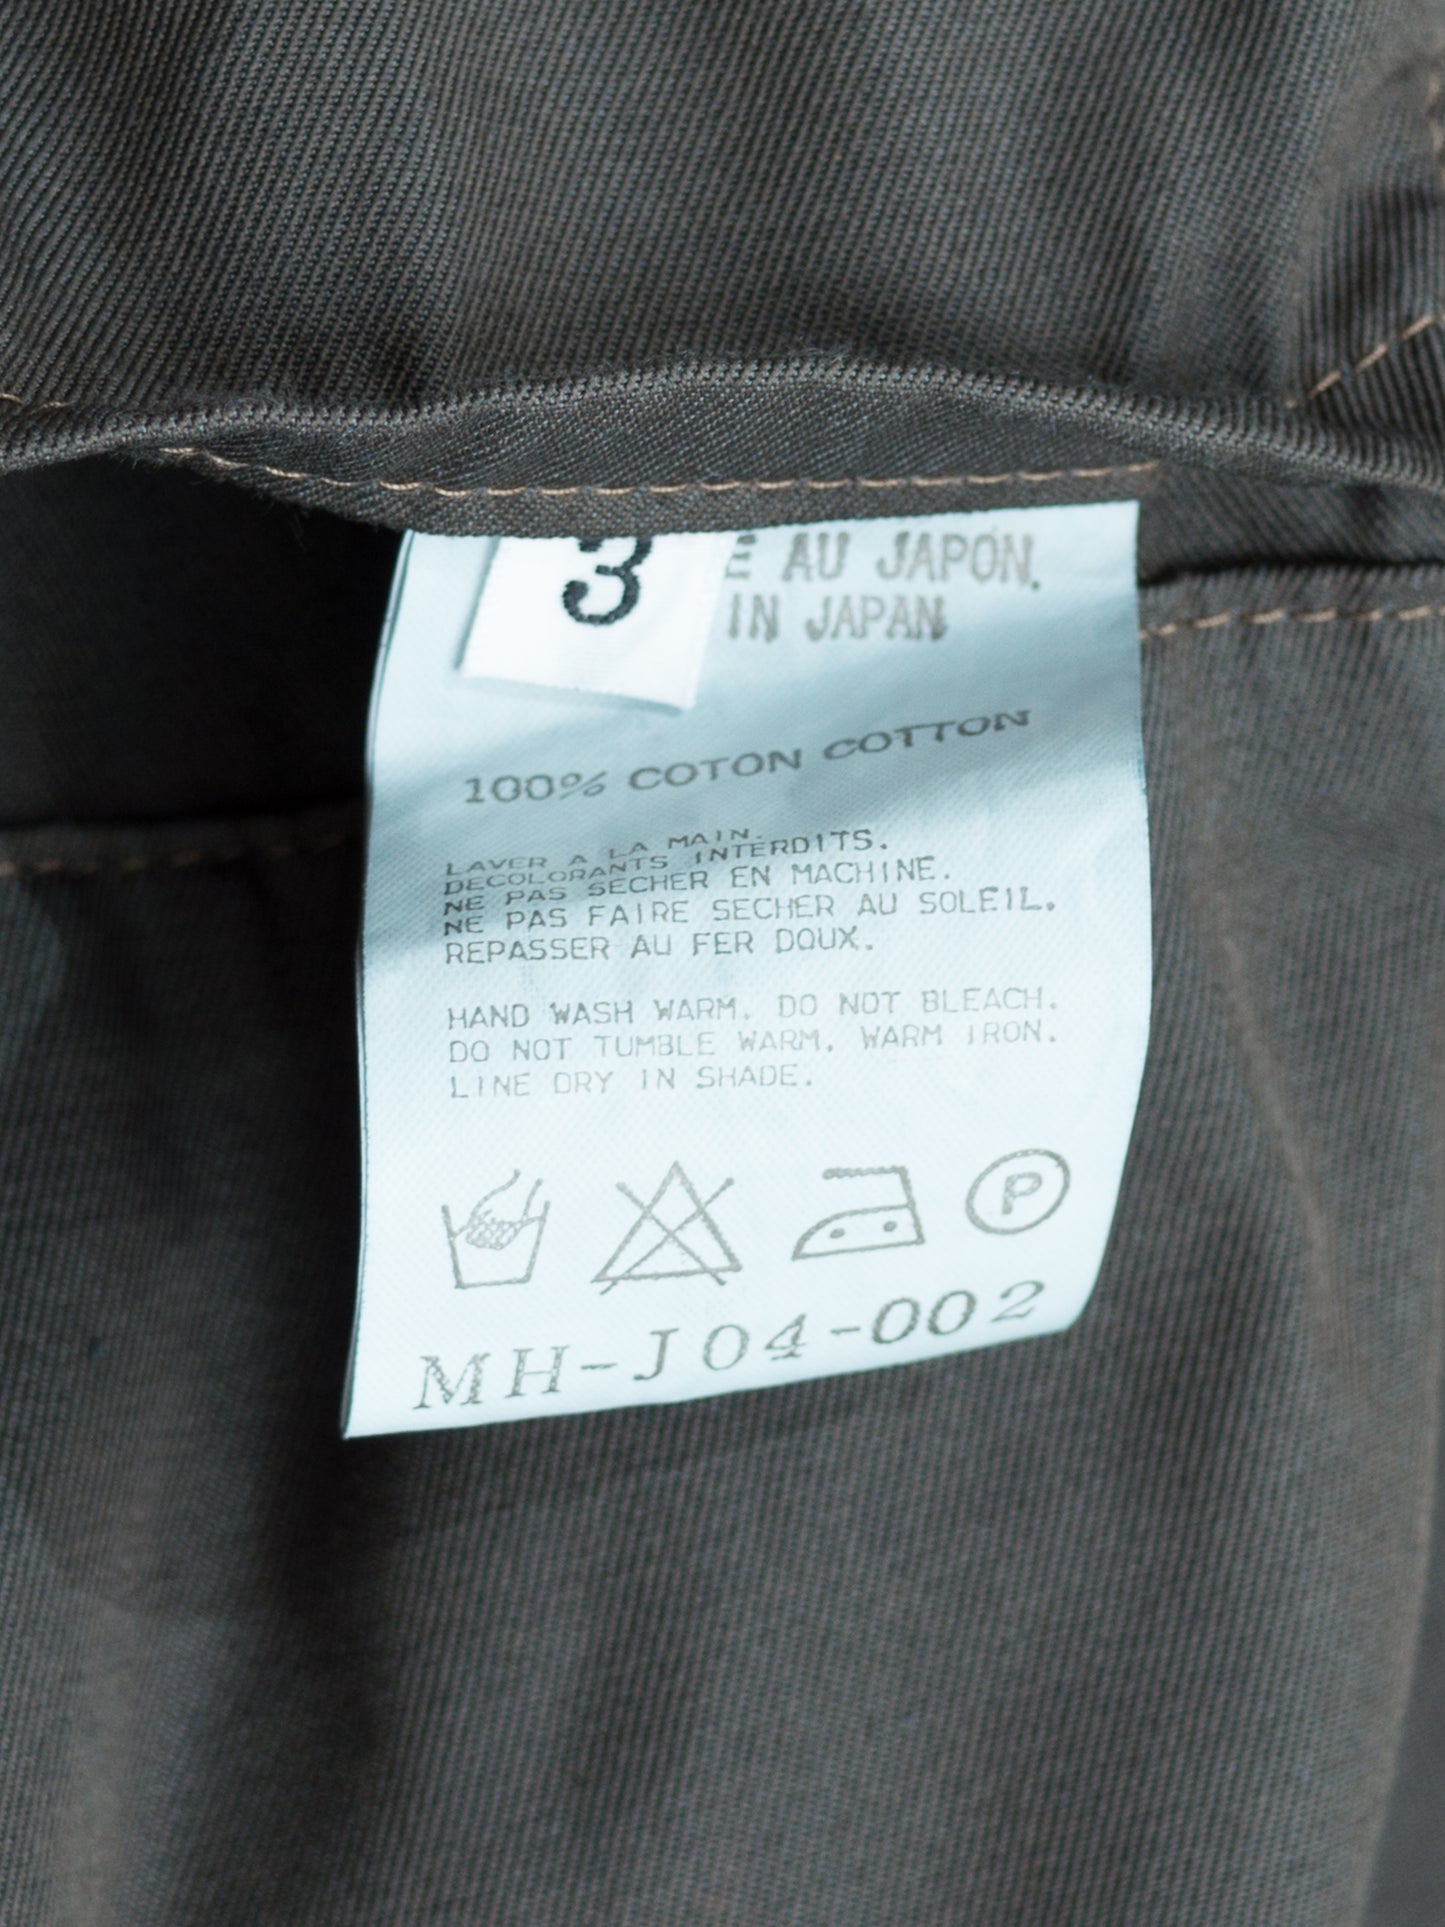 garment dyed tailored jacket army grey ∙ cotton ∙ medium